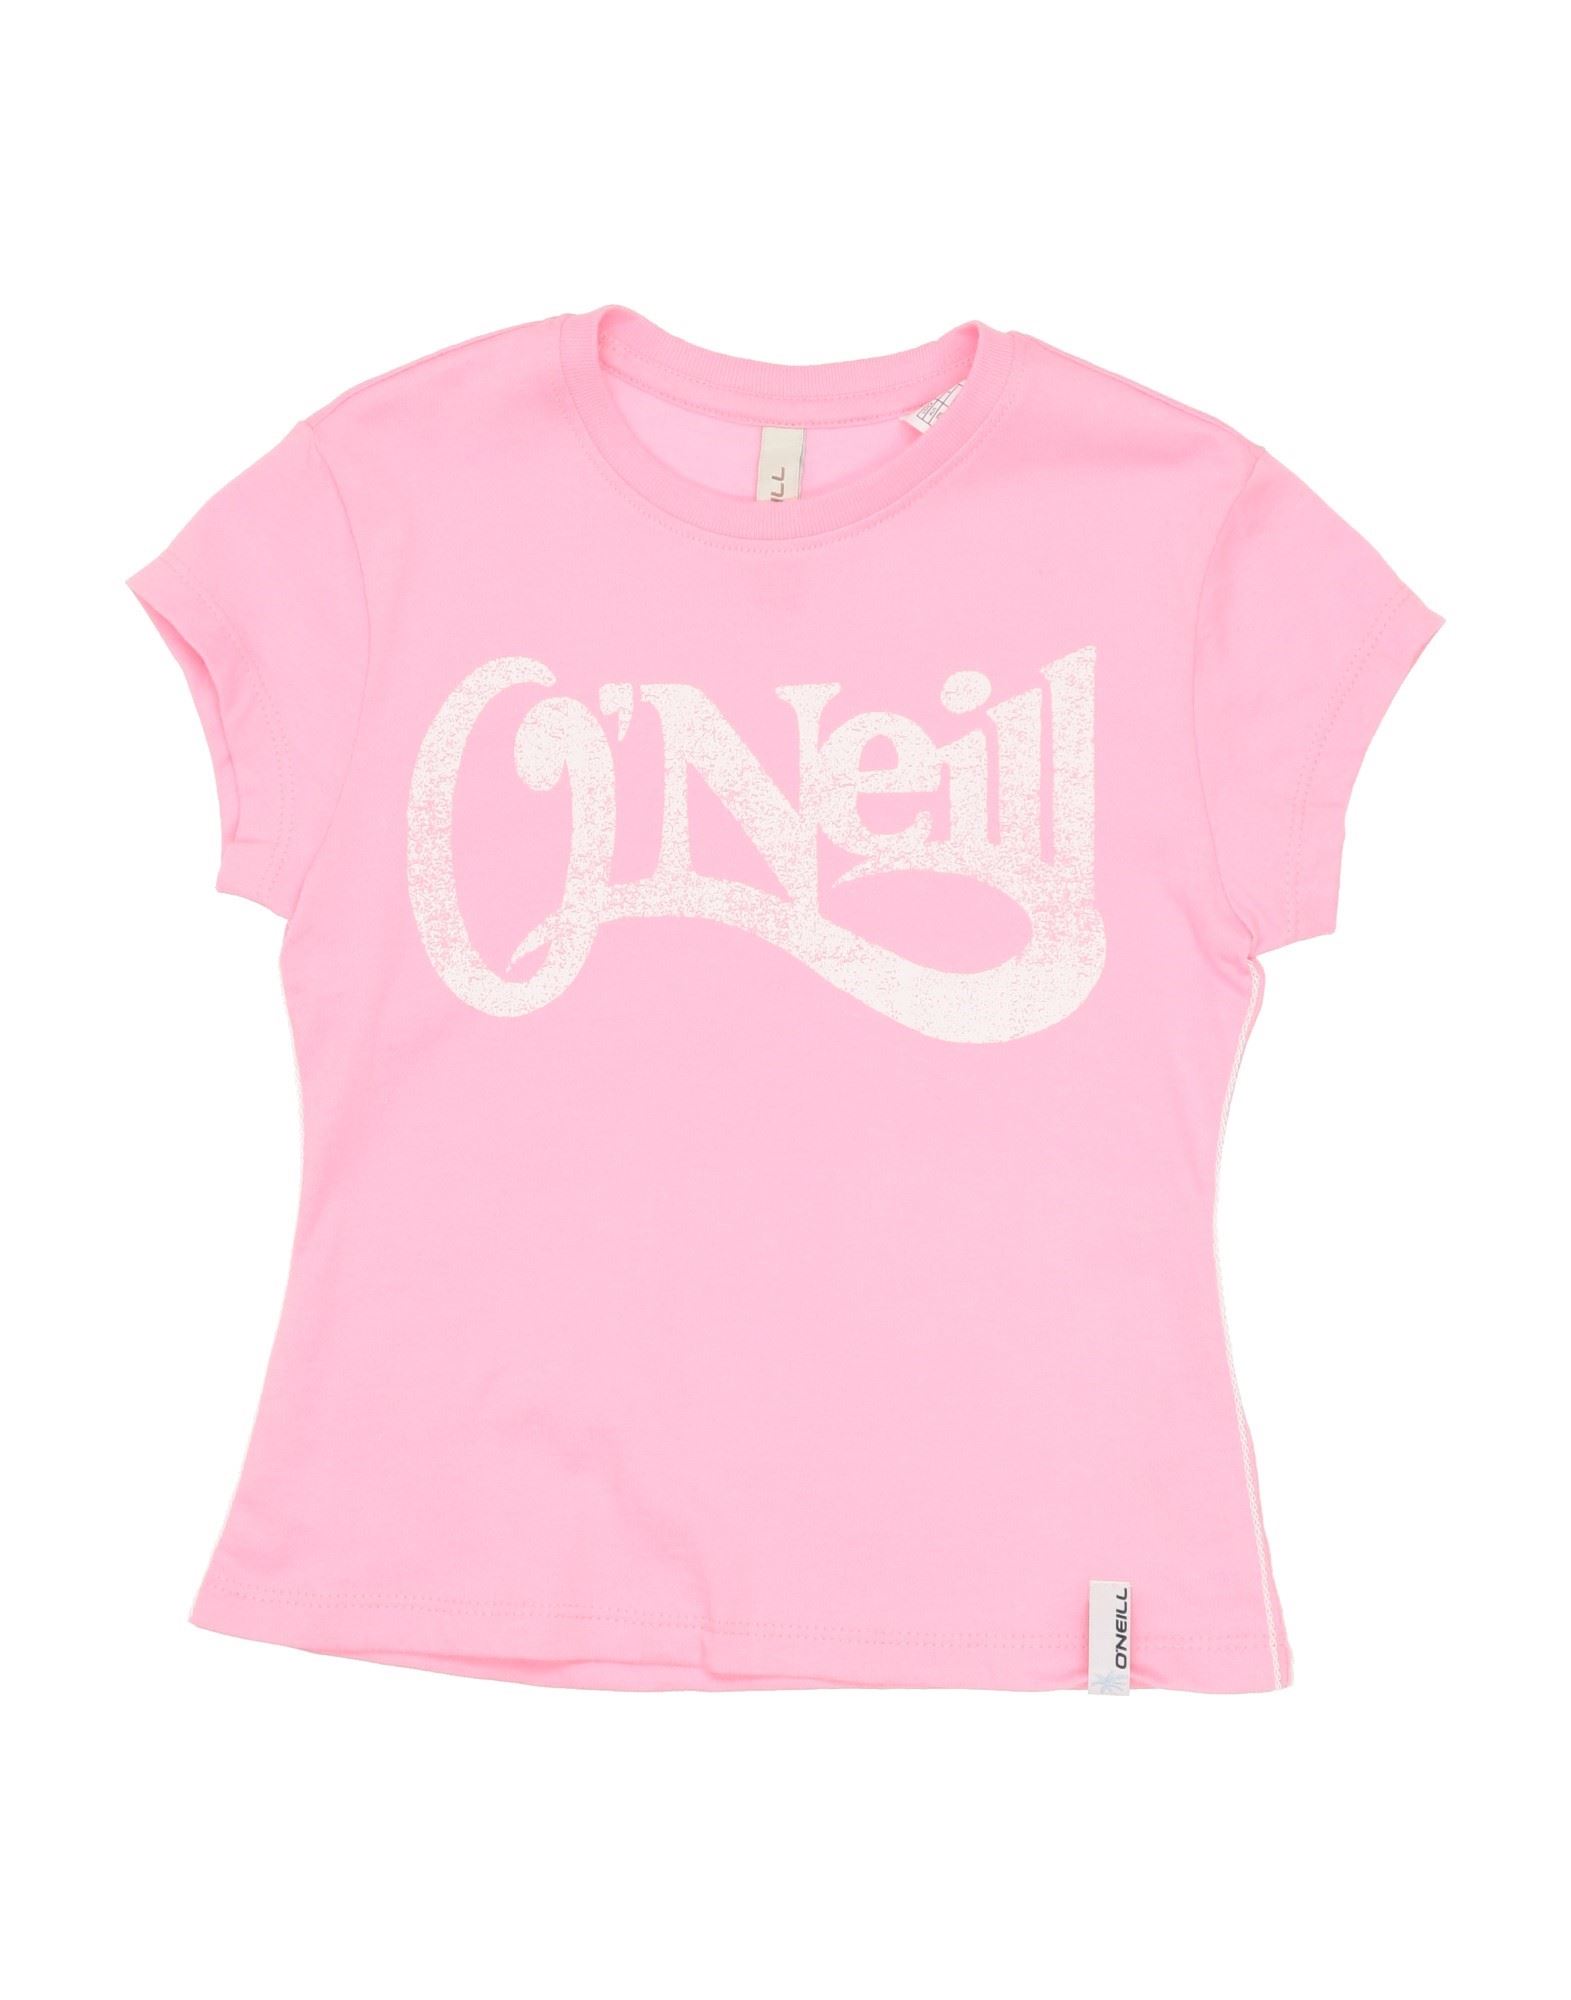 O'NEILL T-shirts Kinder Rosa von O'NEILL